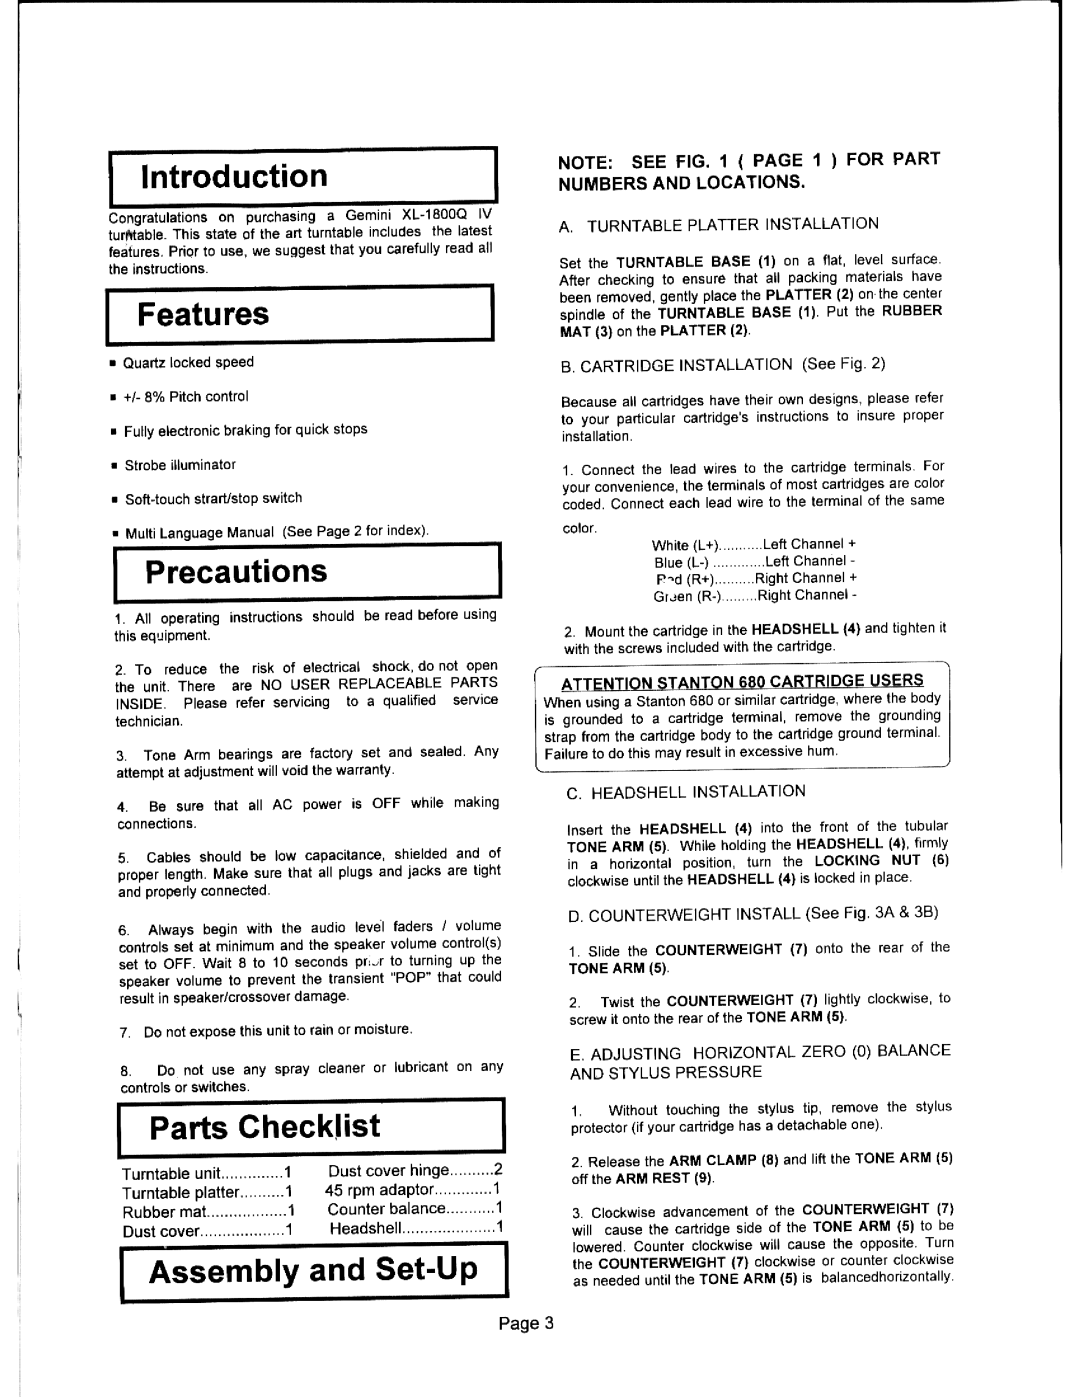 Gemini XL-1800Q IV manual 